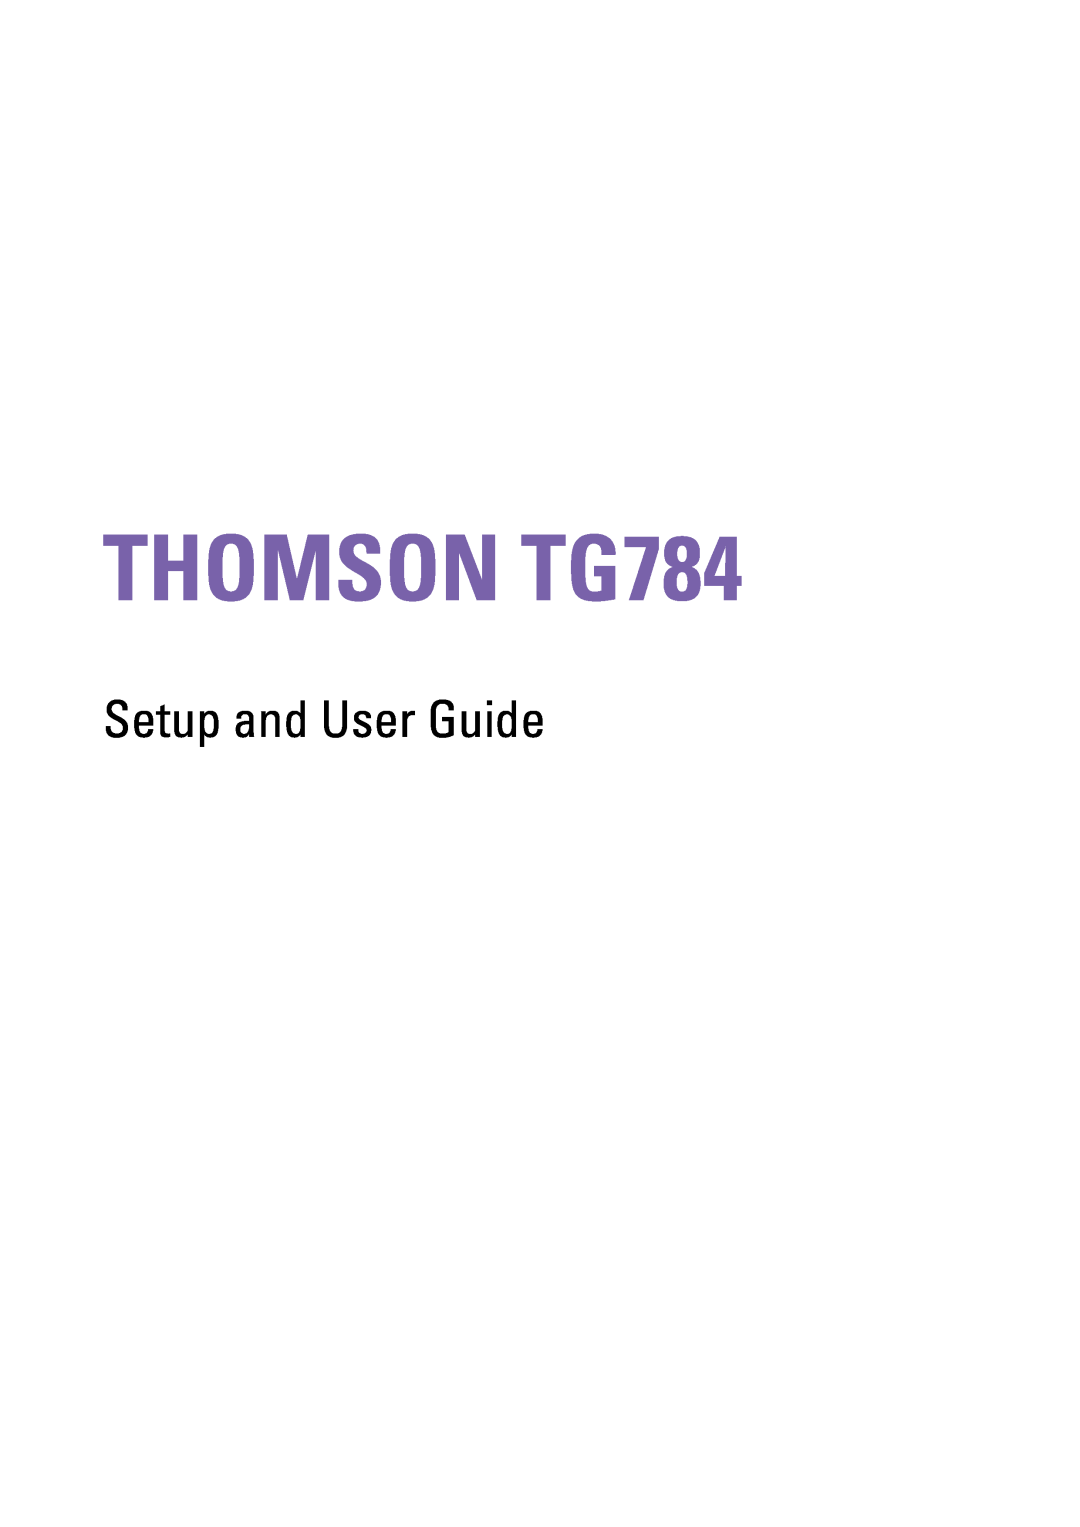 Technicolor - Thomson manual THOMSON TG784, Setup and User Guide 